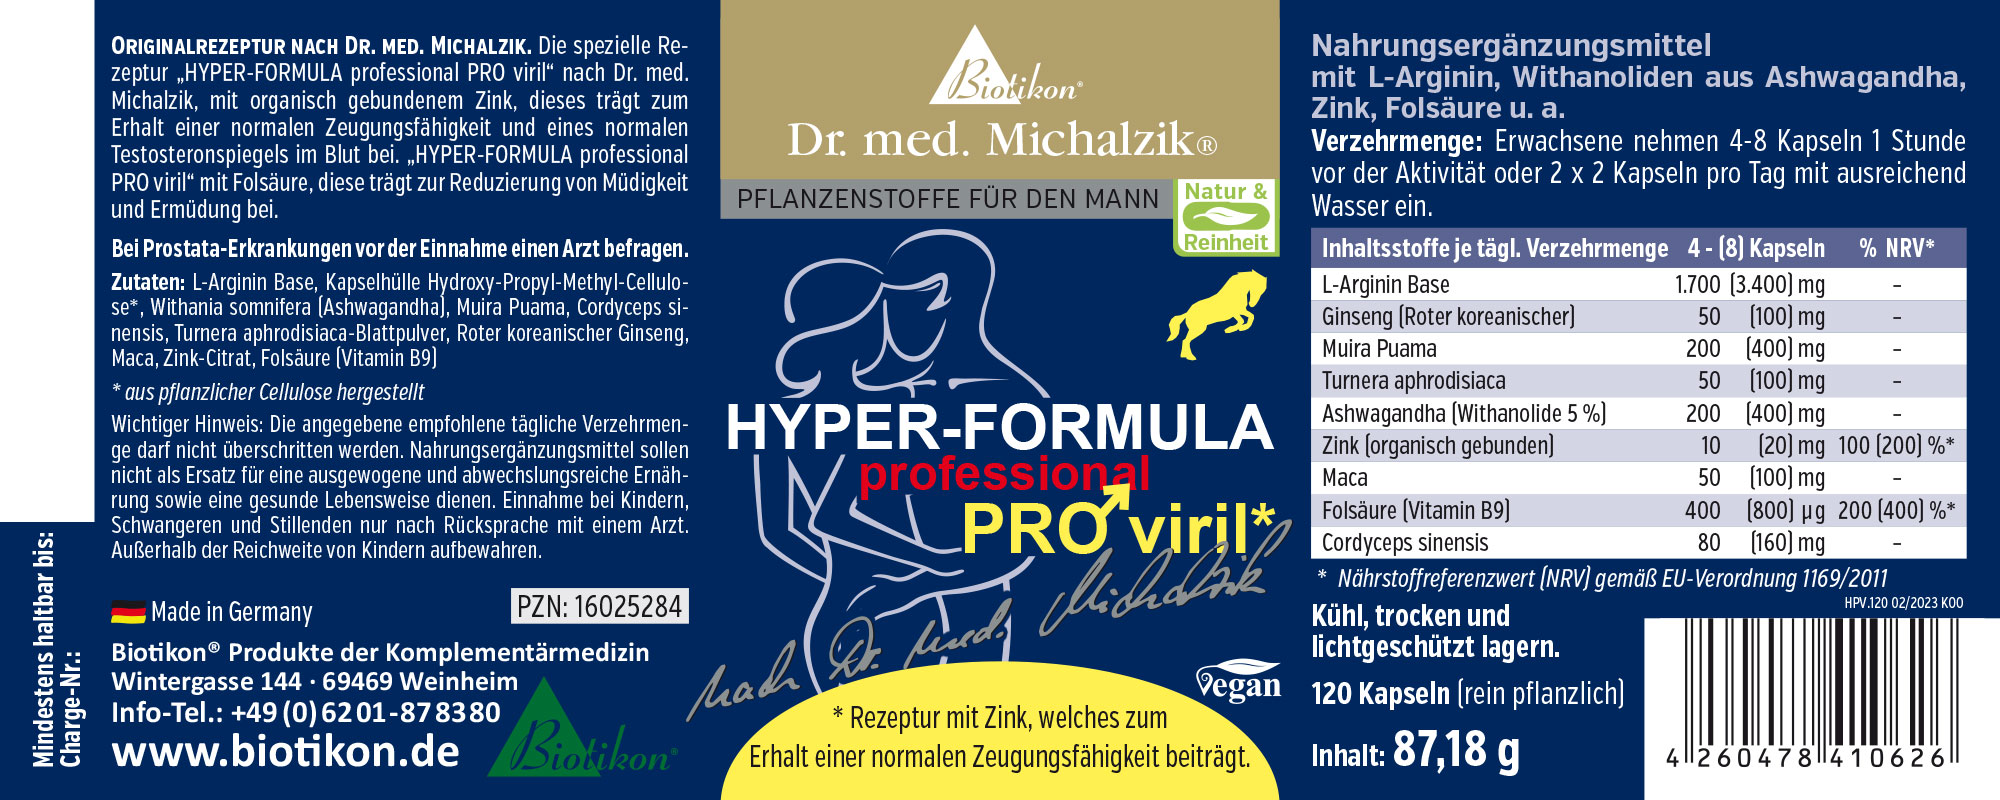 Hyper PRO viril stamina du Docteur Alexander Michalzik